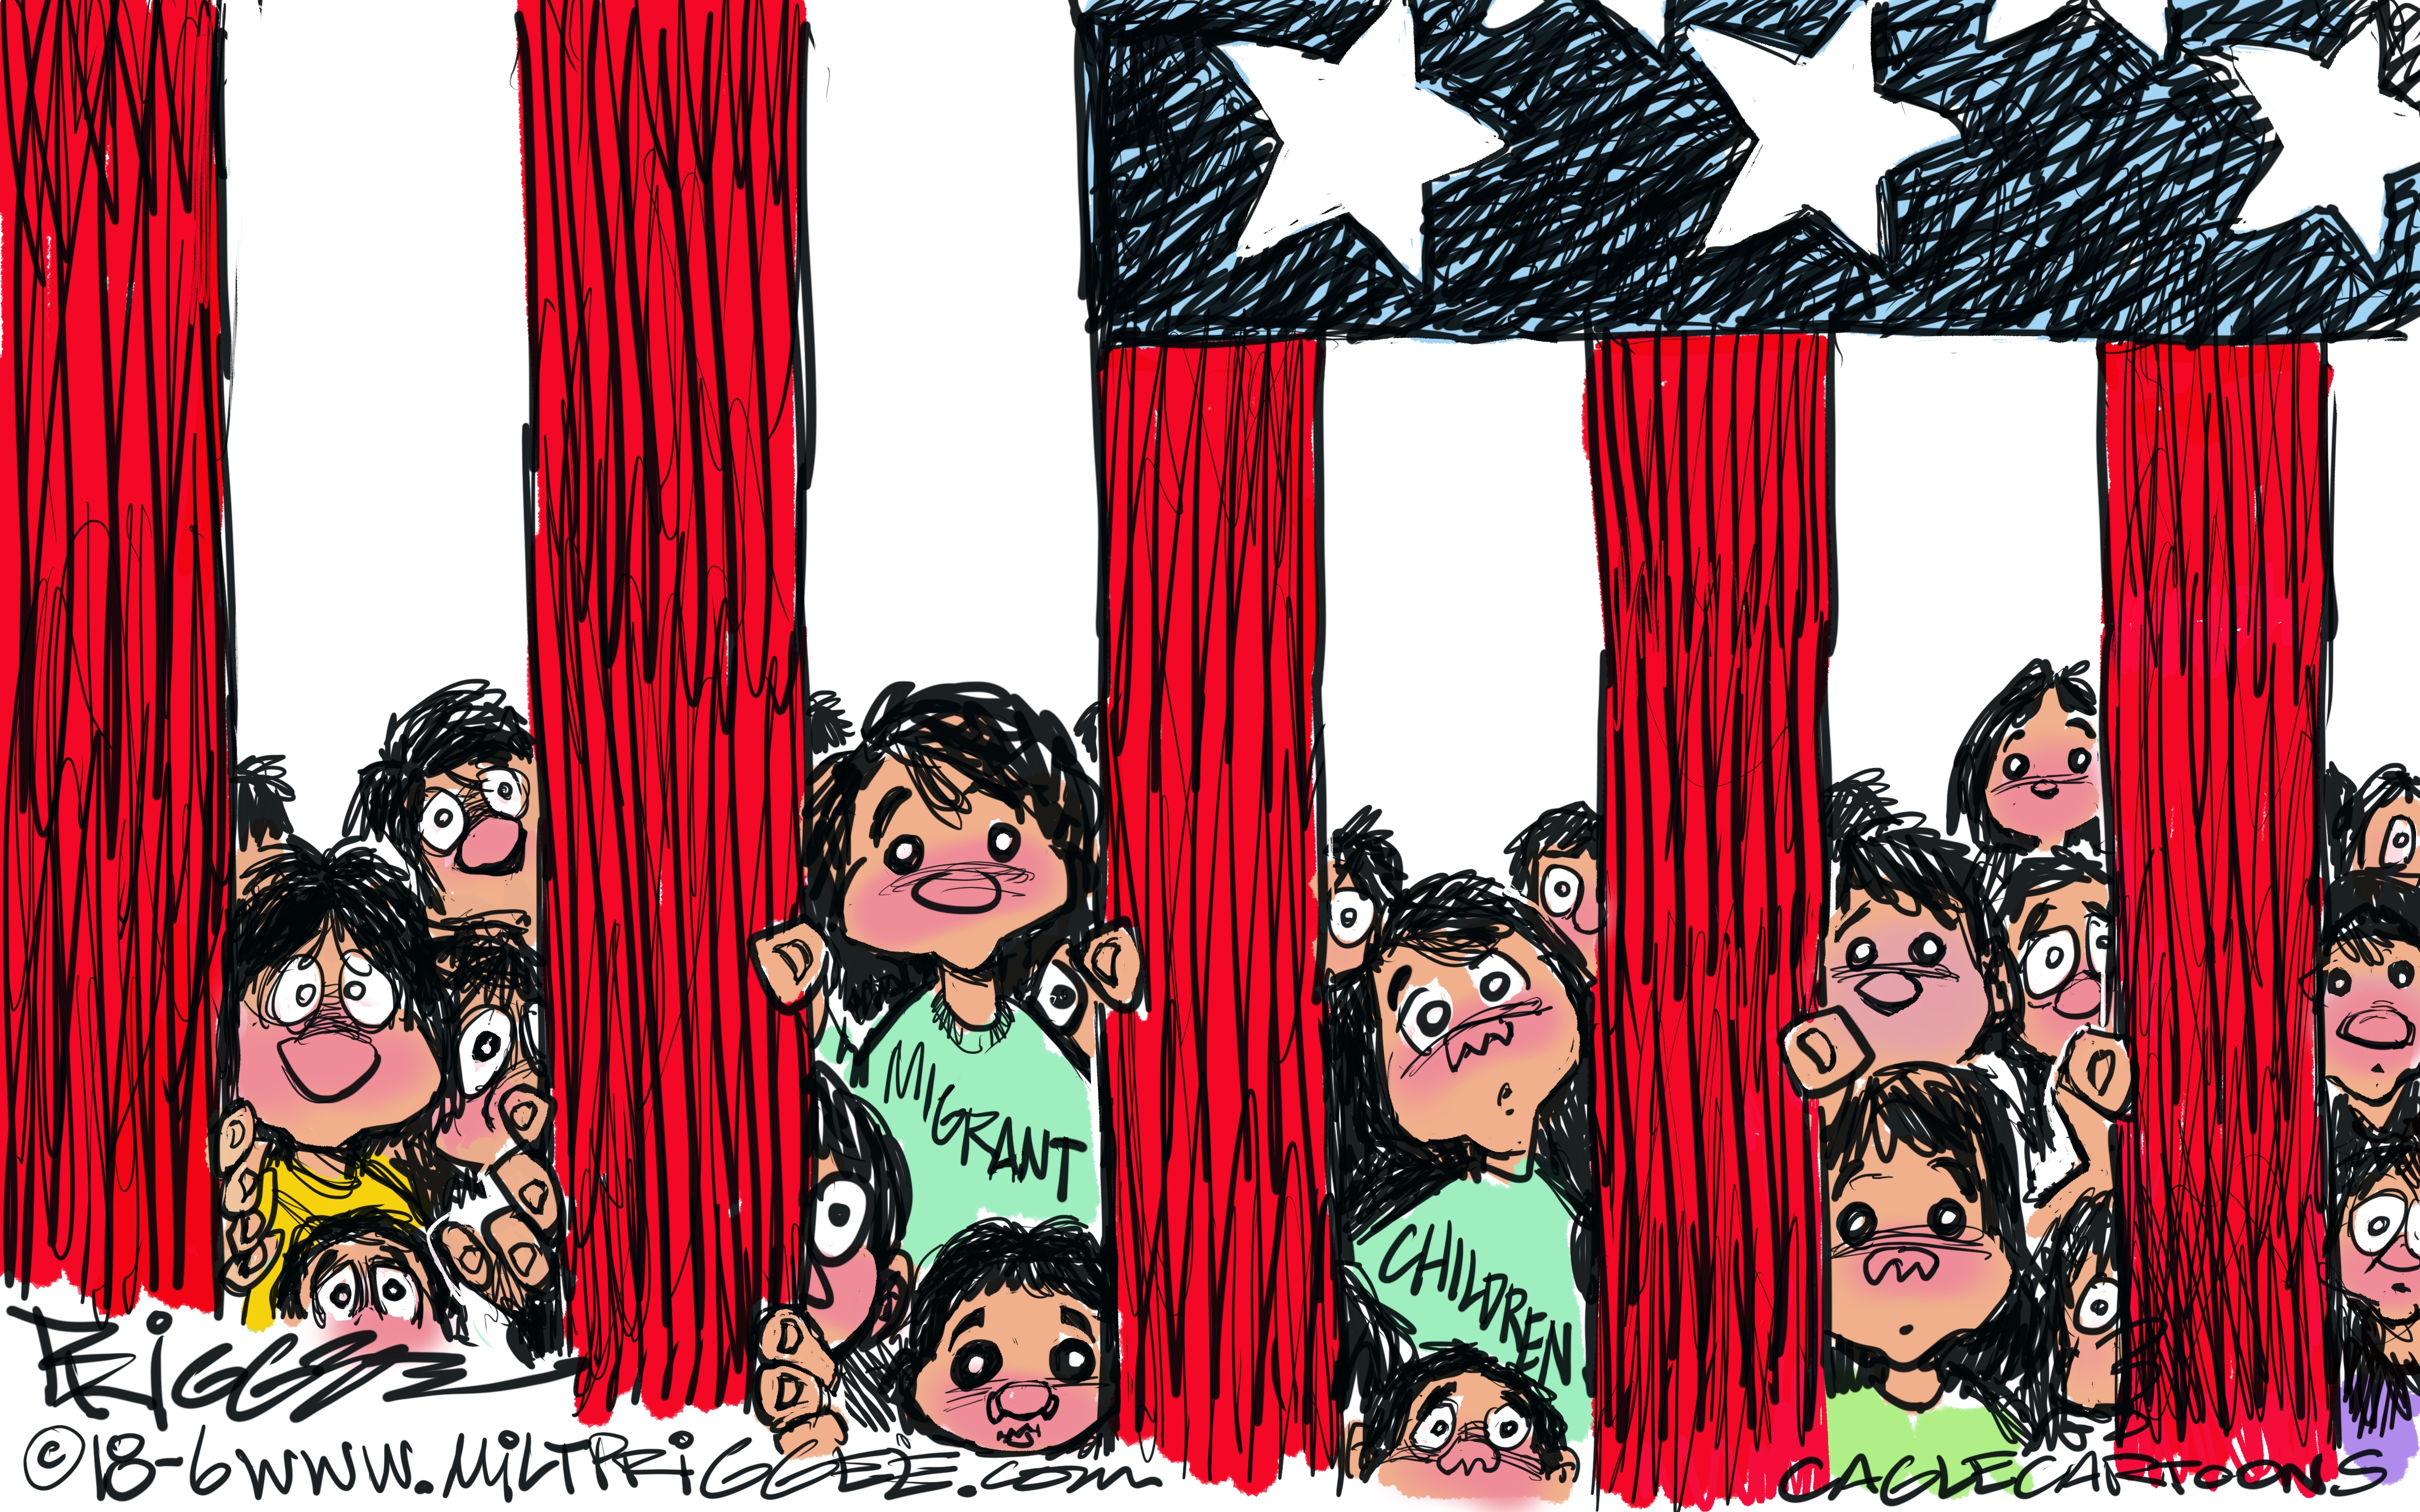 Political cartoon U.S. migrant children immigration family separation ICE